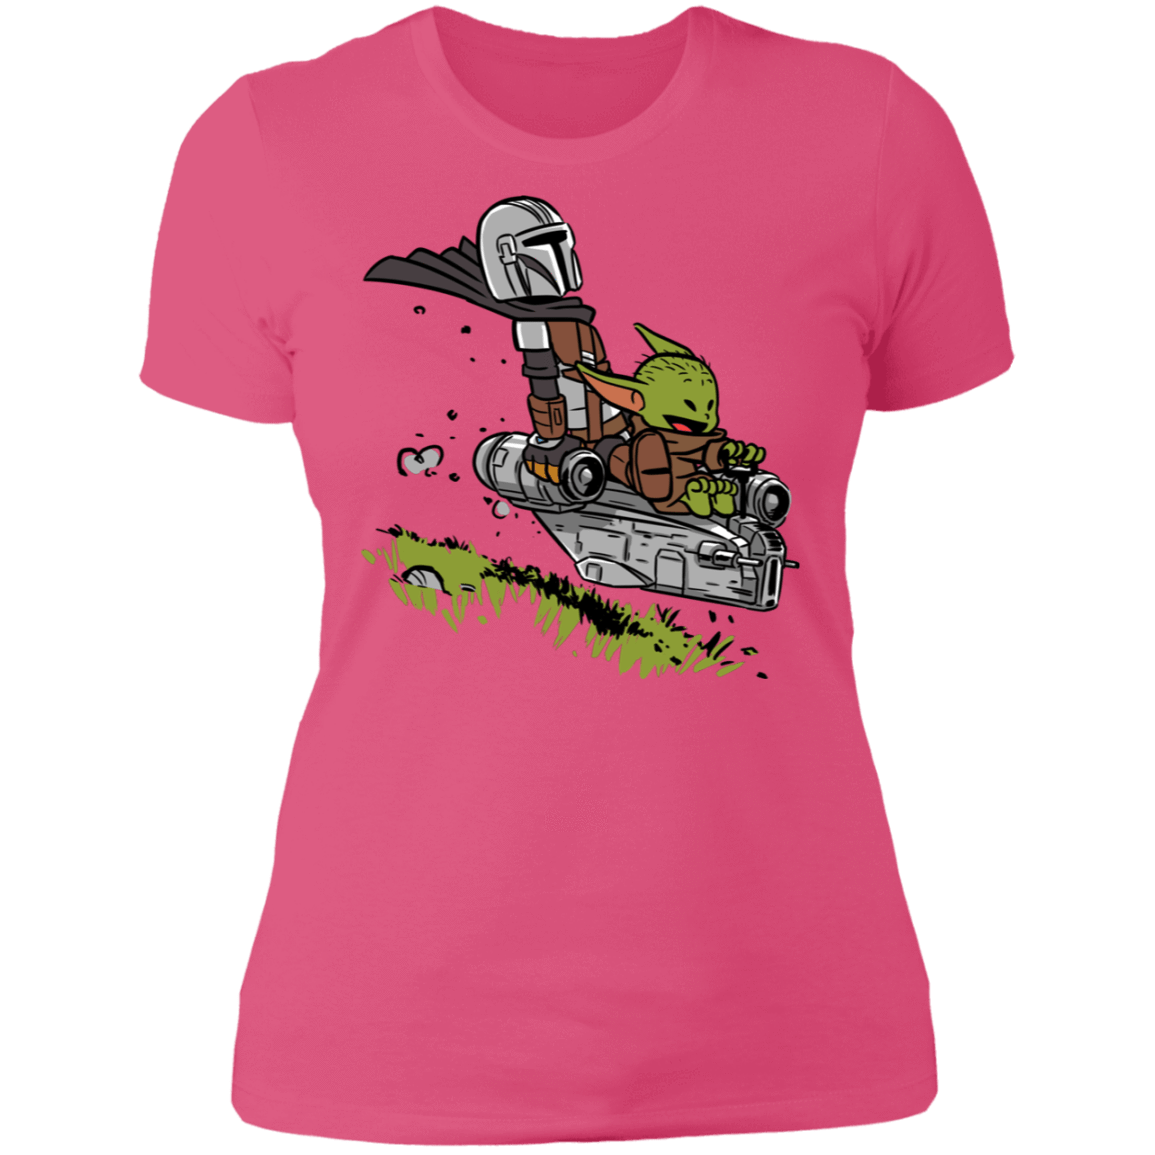 T-Shirts Hot Pink / S Calvin Yoda Mandalorian Women's Premium T-Shirt